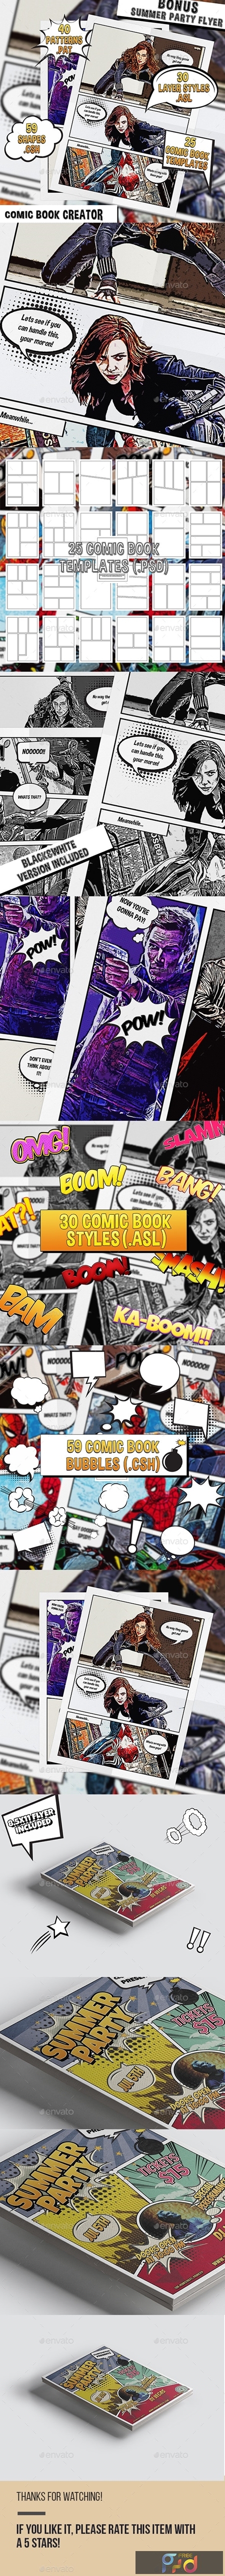 Photoshop Comic Book Template from freepsdvn.com